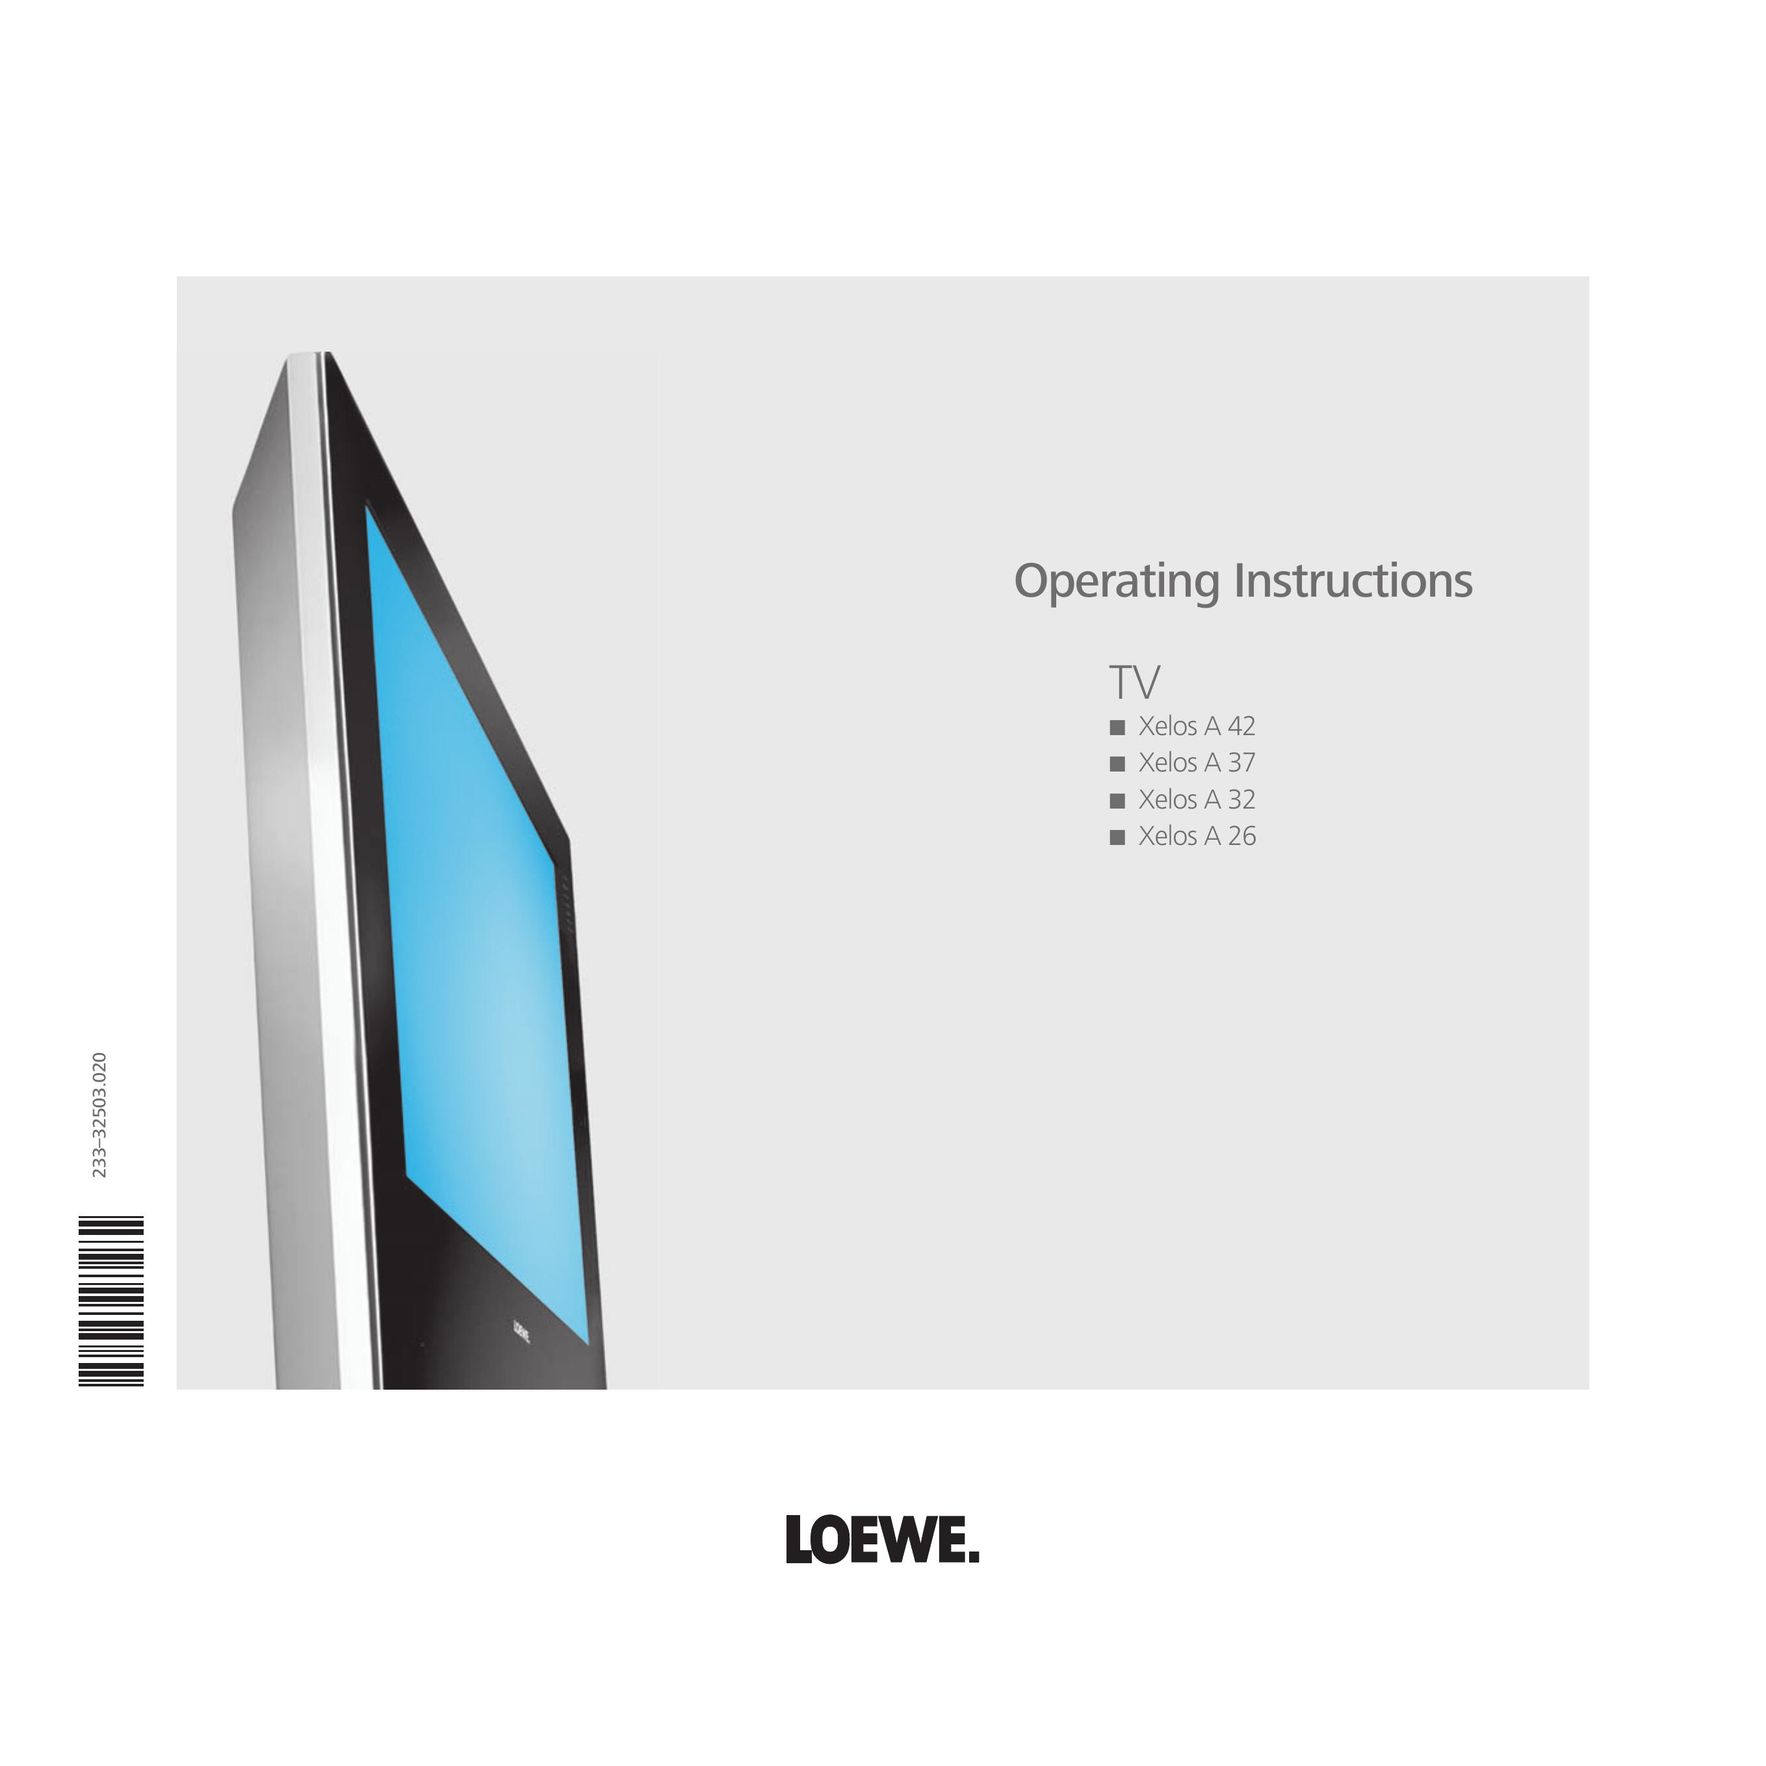 Loewe A 37 Flat Panel Television User Manual